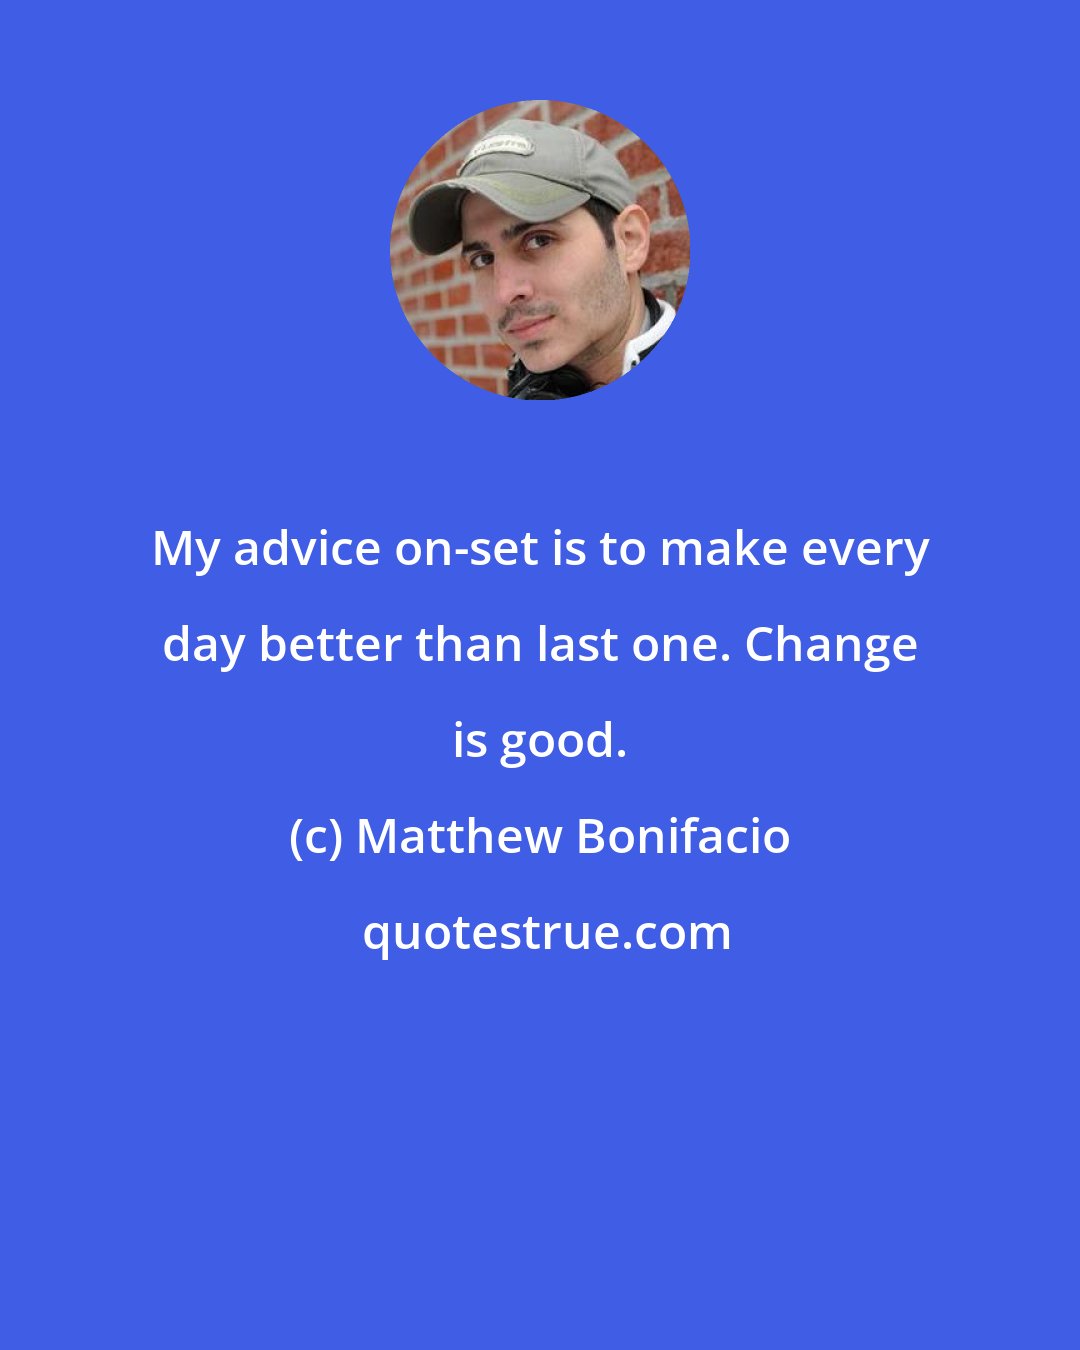 Matthew Bonifacio: My advice on-set is to make every day better than last one. Change is good.